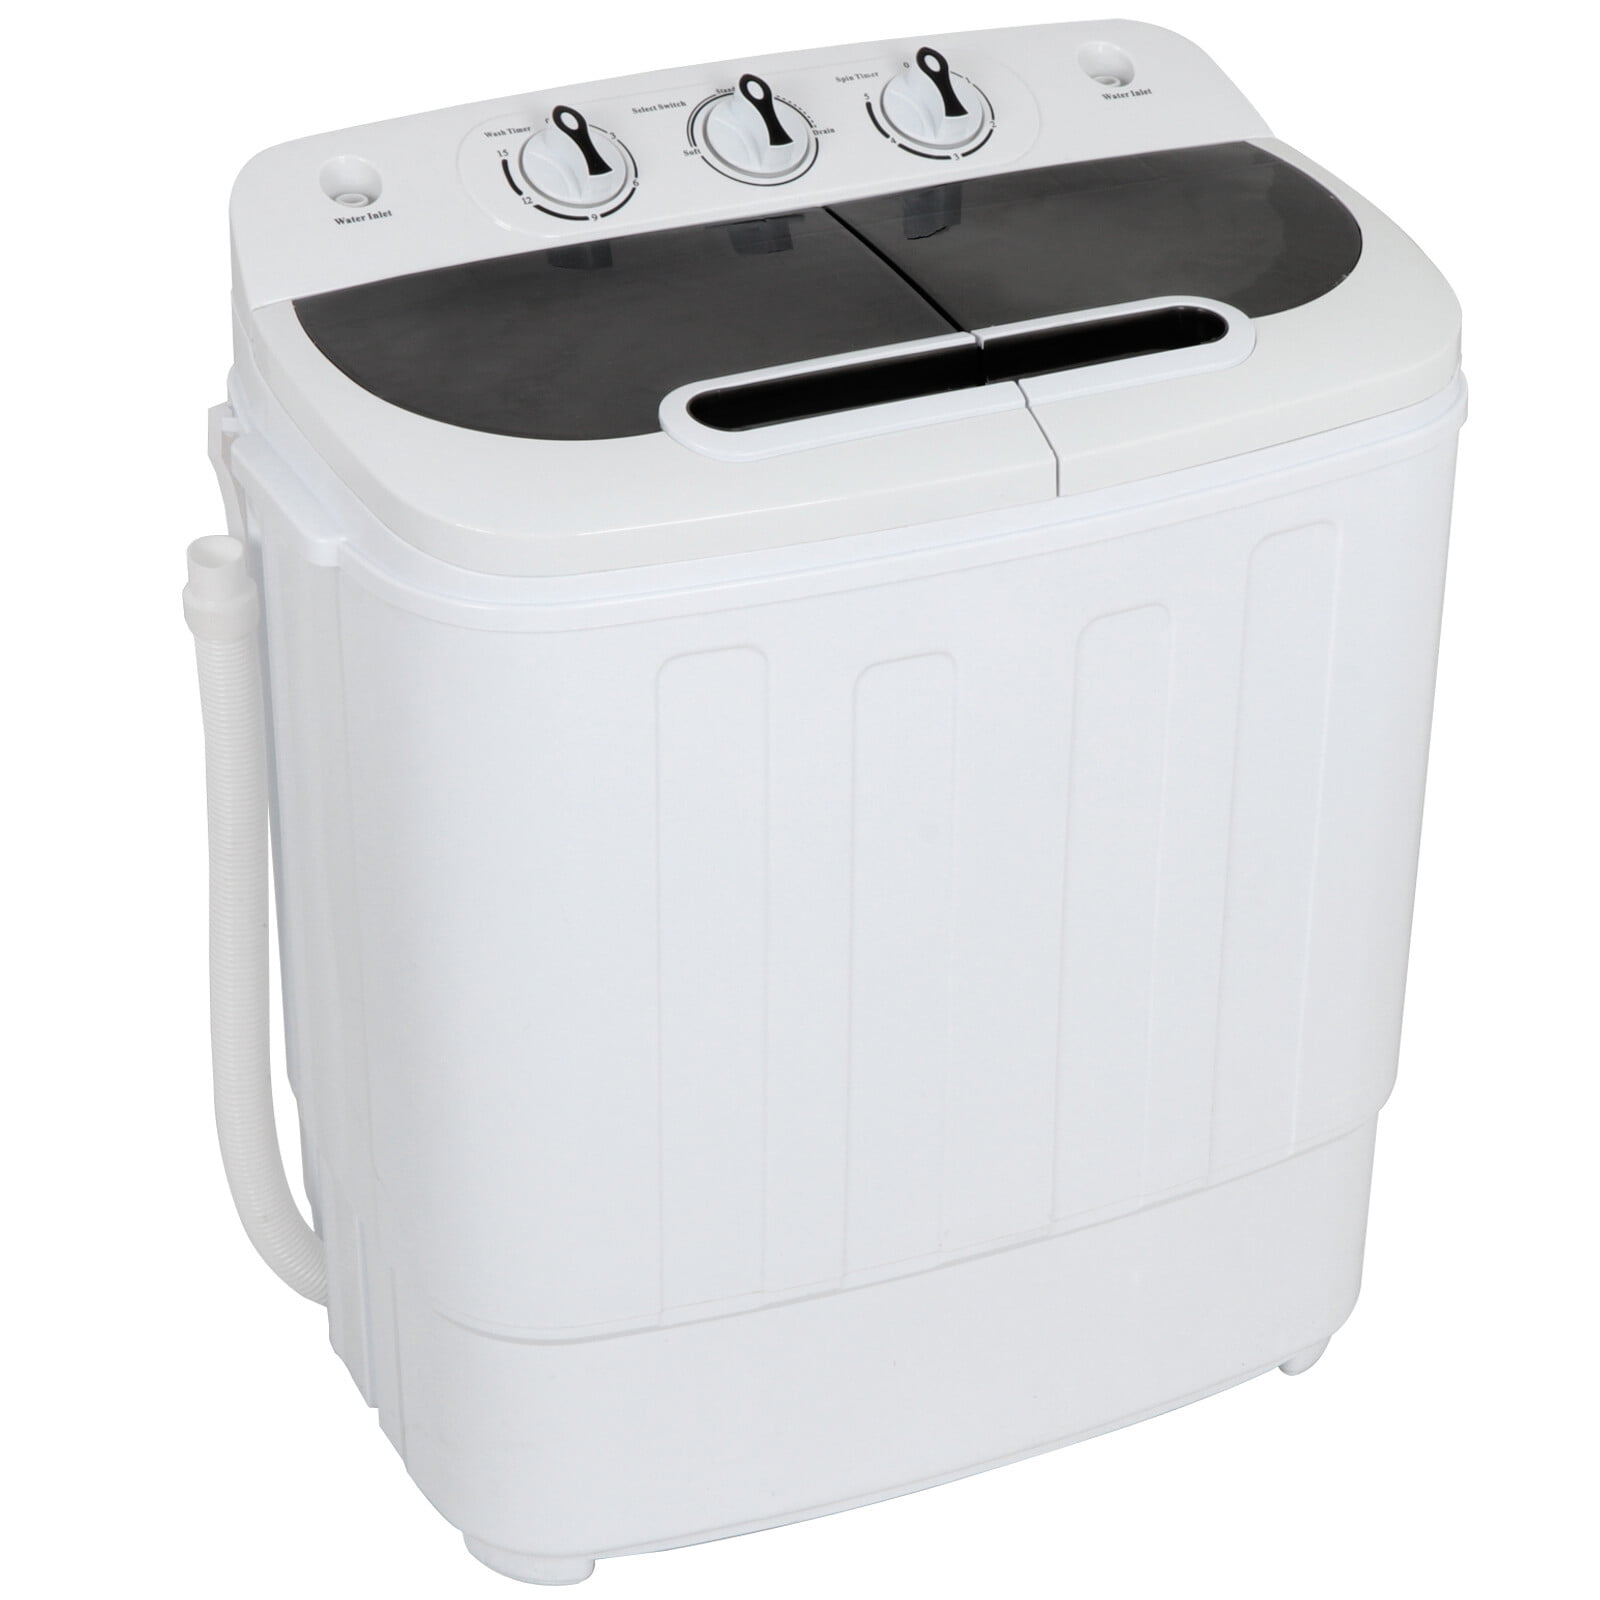 10.4/13 LBSPortable Mini Washing Machine Compact Twin Tub Washer Spin &  Dryer